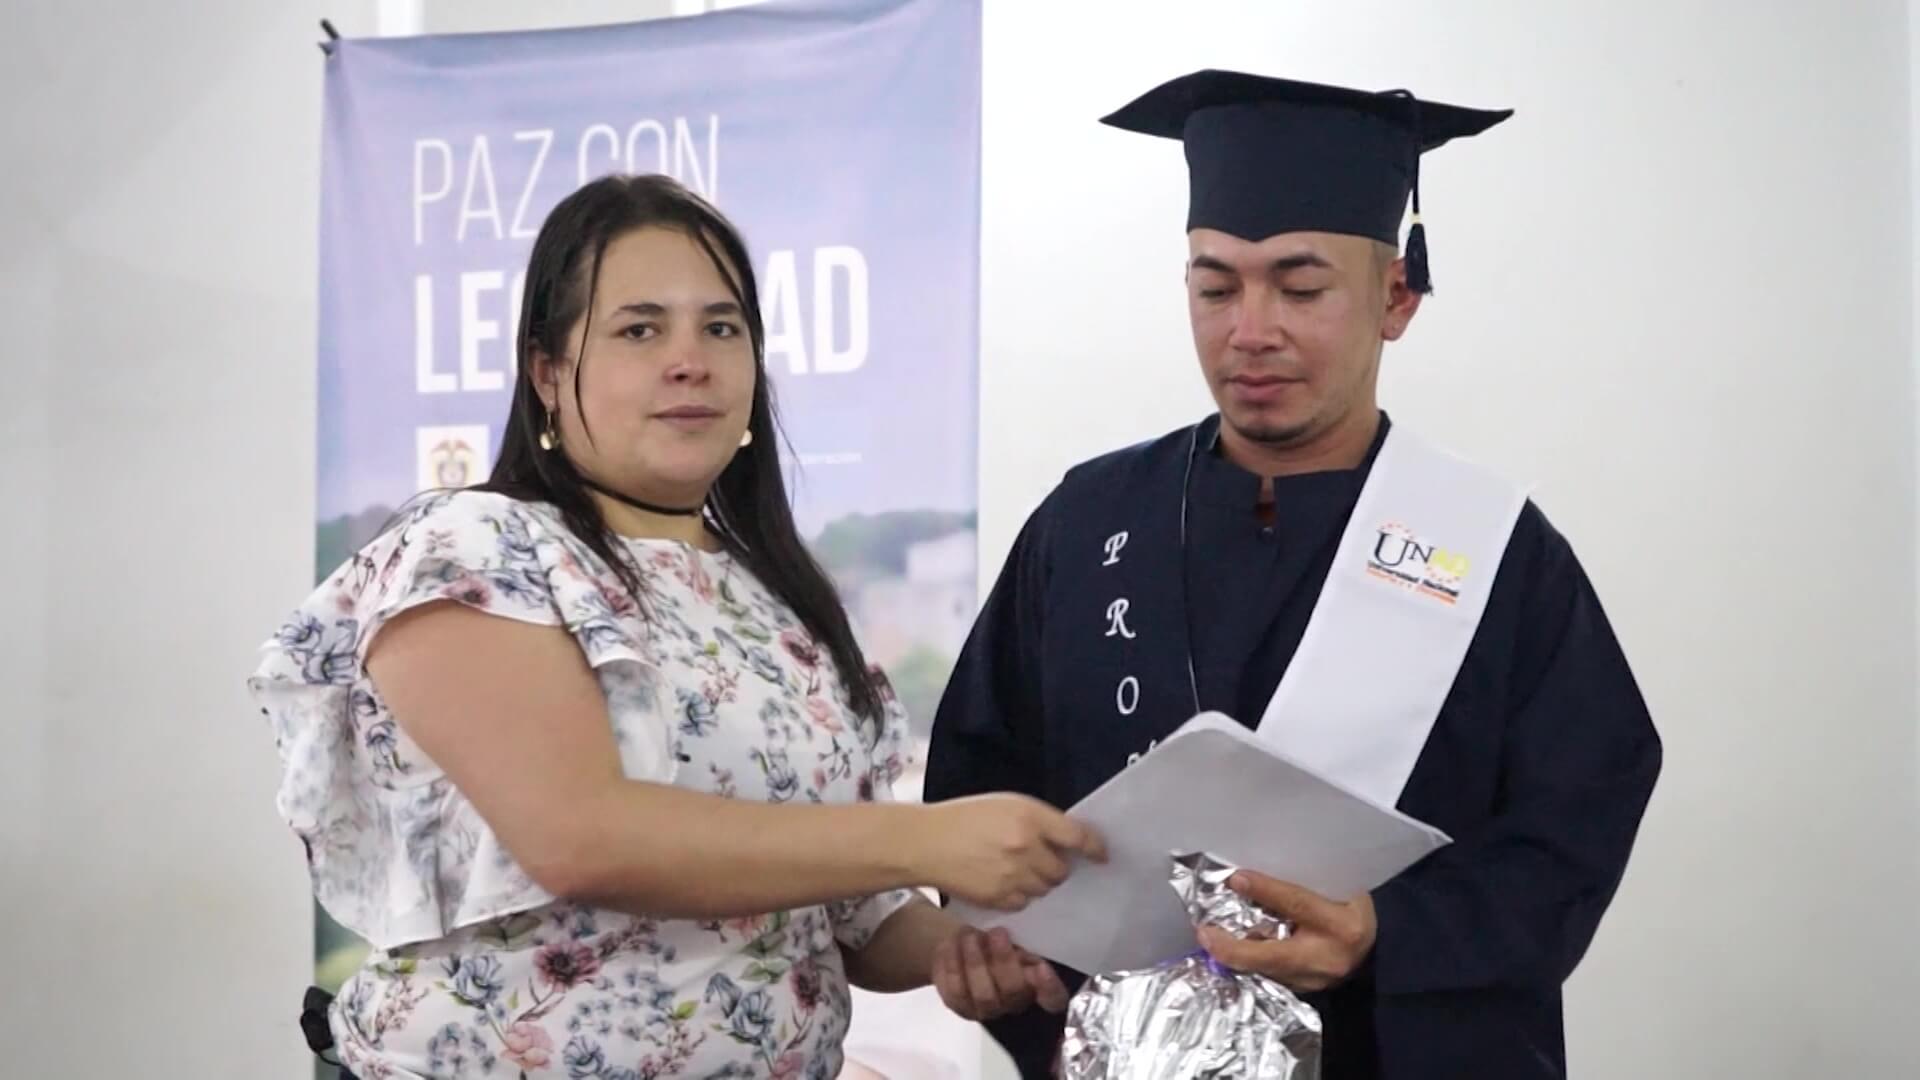 277 excombatientes graduados de bachillerato en Antioquia